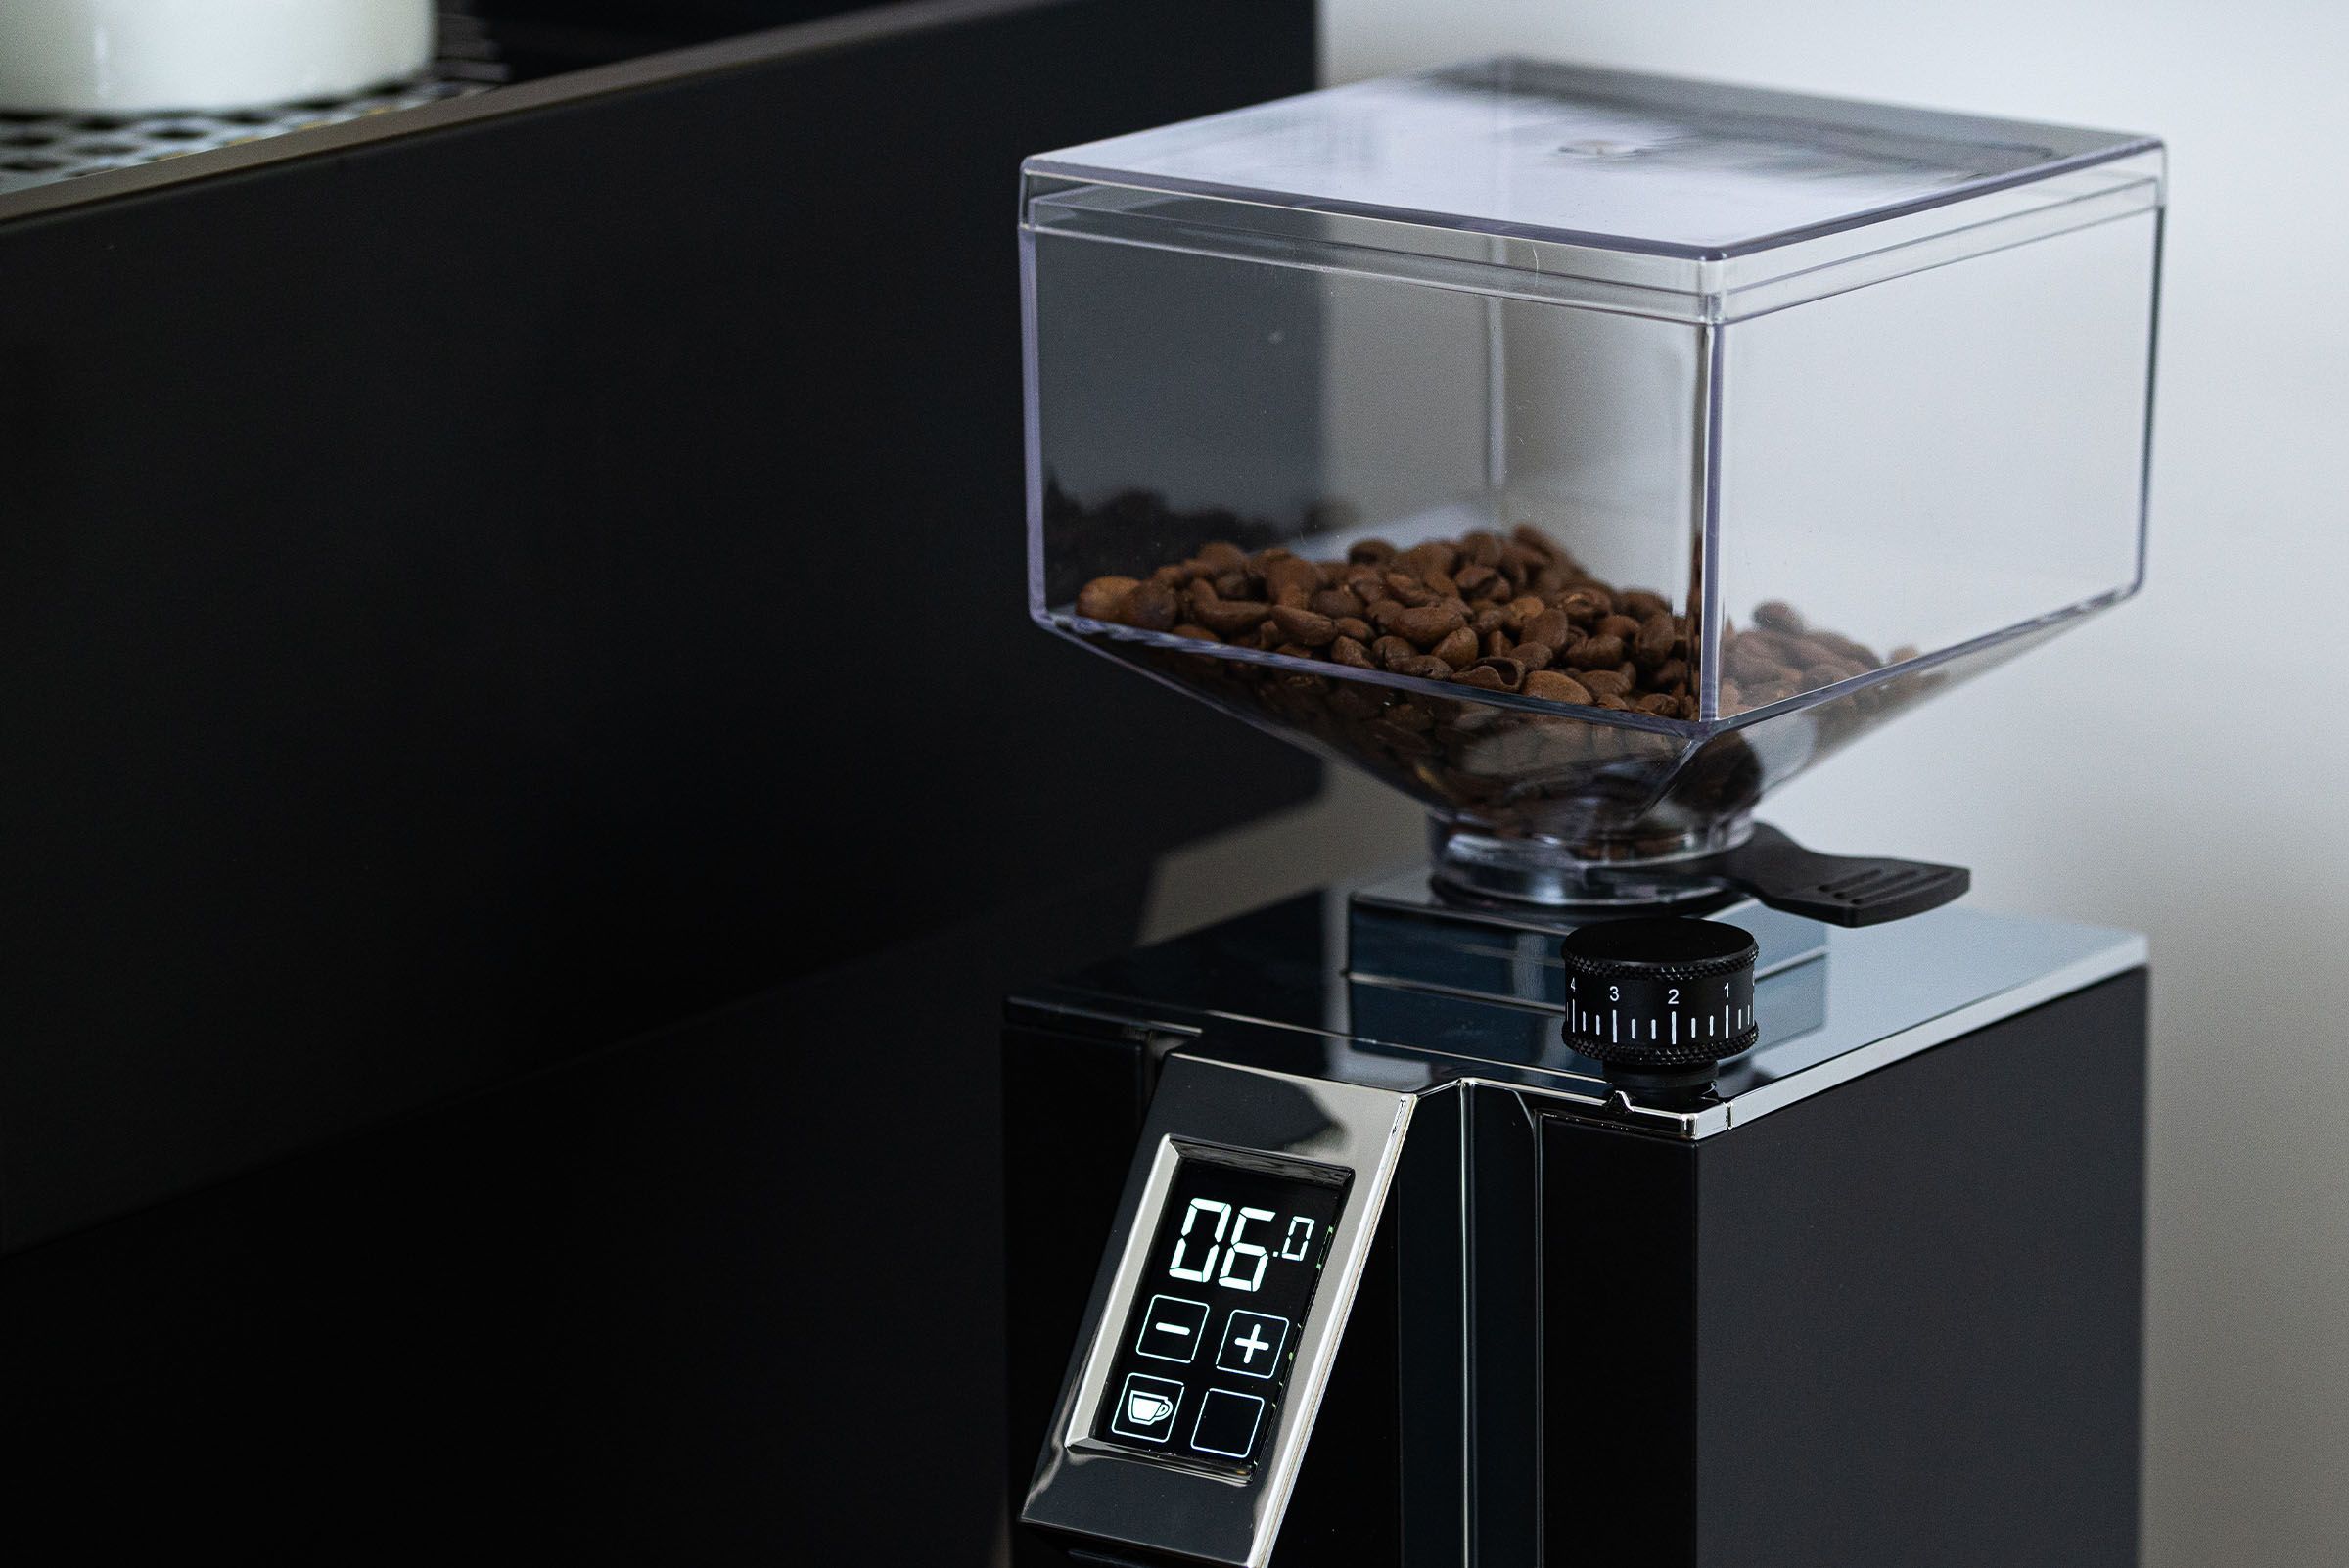 Eureka Mignon Specialita Stepless Espresso Coffee Grinder